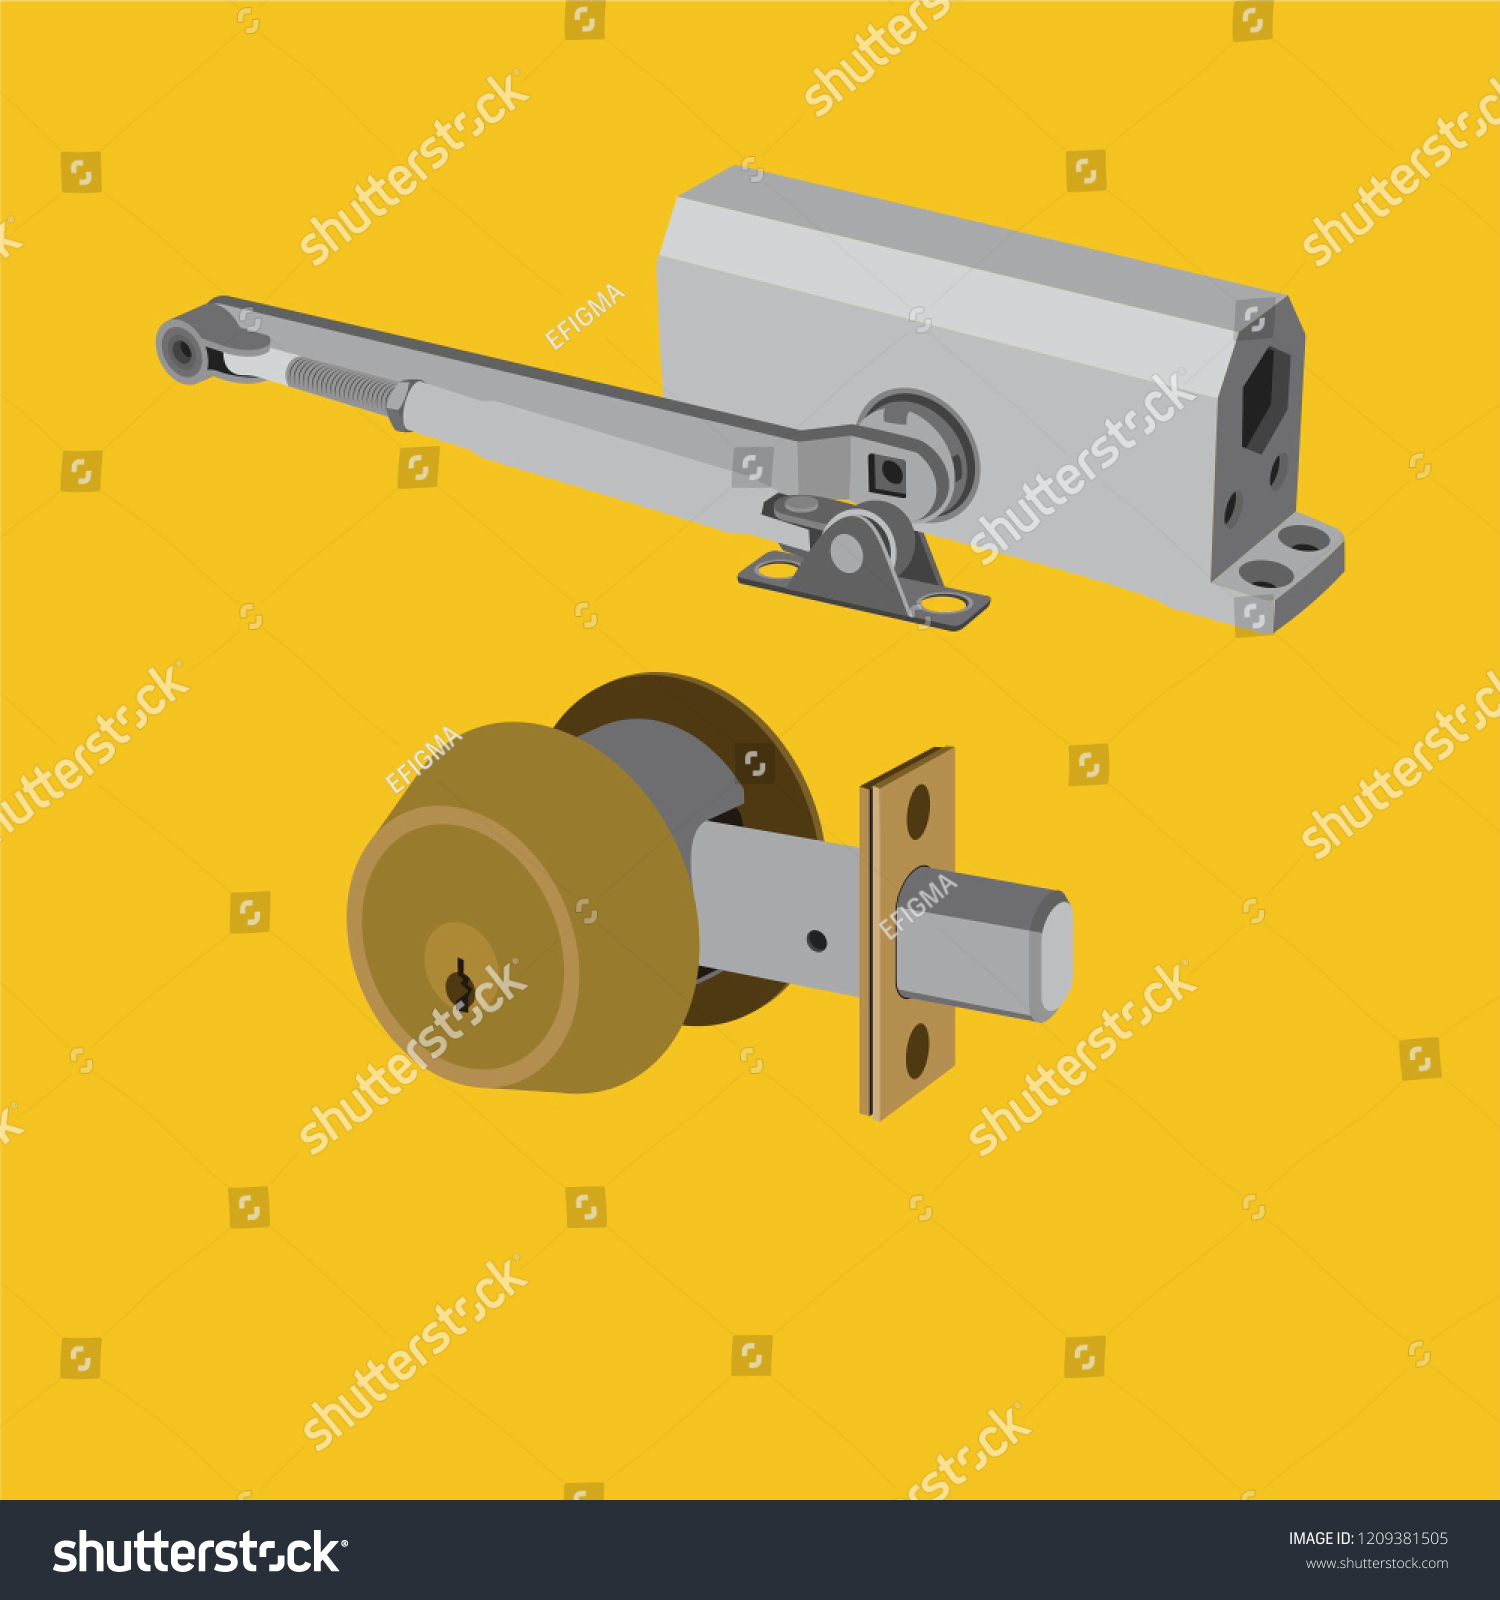 locks hardware supply